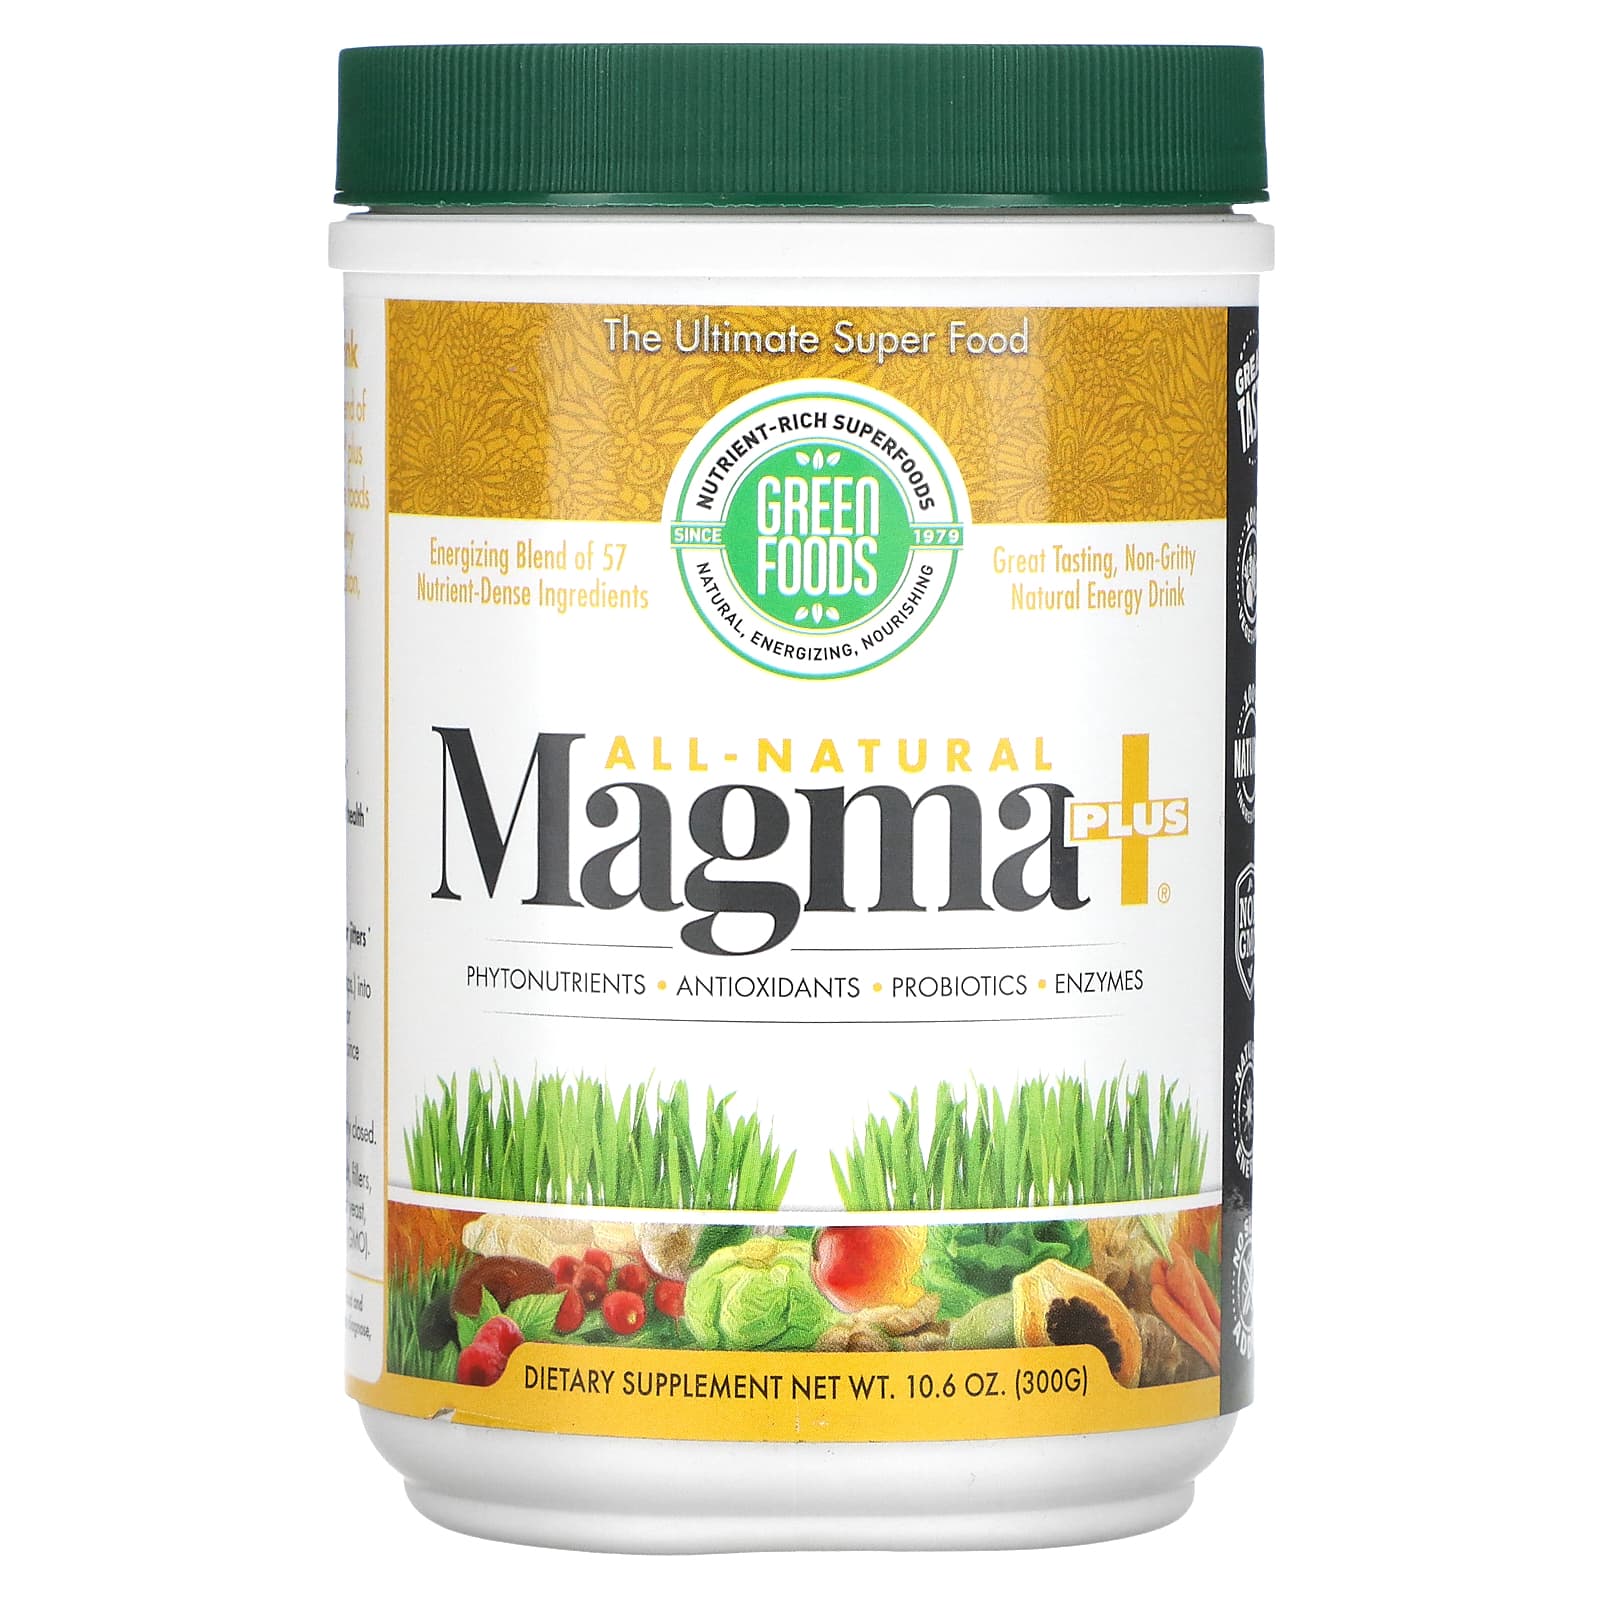 Green Foods Corporation All-Natural Magma Plus 10.6 oz (300 g) green foods corporation органические и сырые побеги пшеницы и трав 300 г